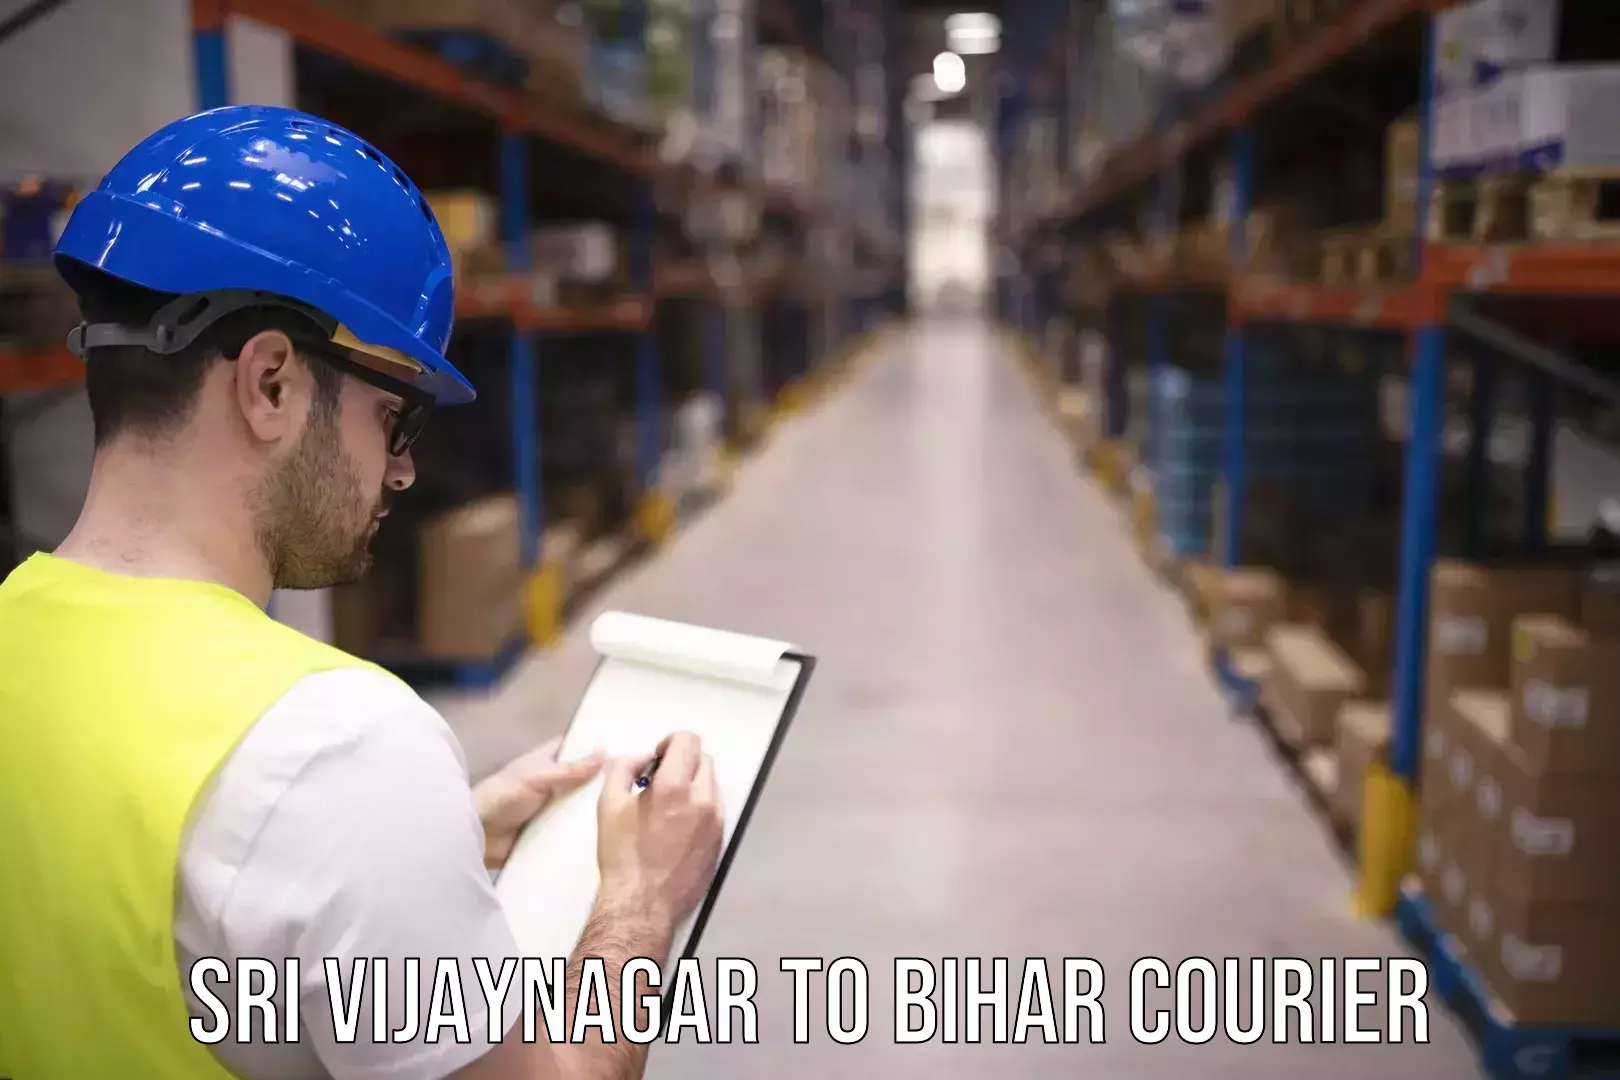 Courier service efficiency in Sri Vijaynagar to Bihar